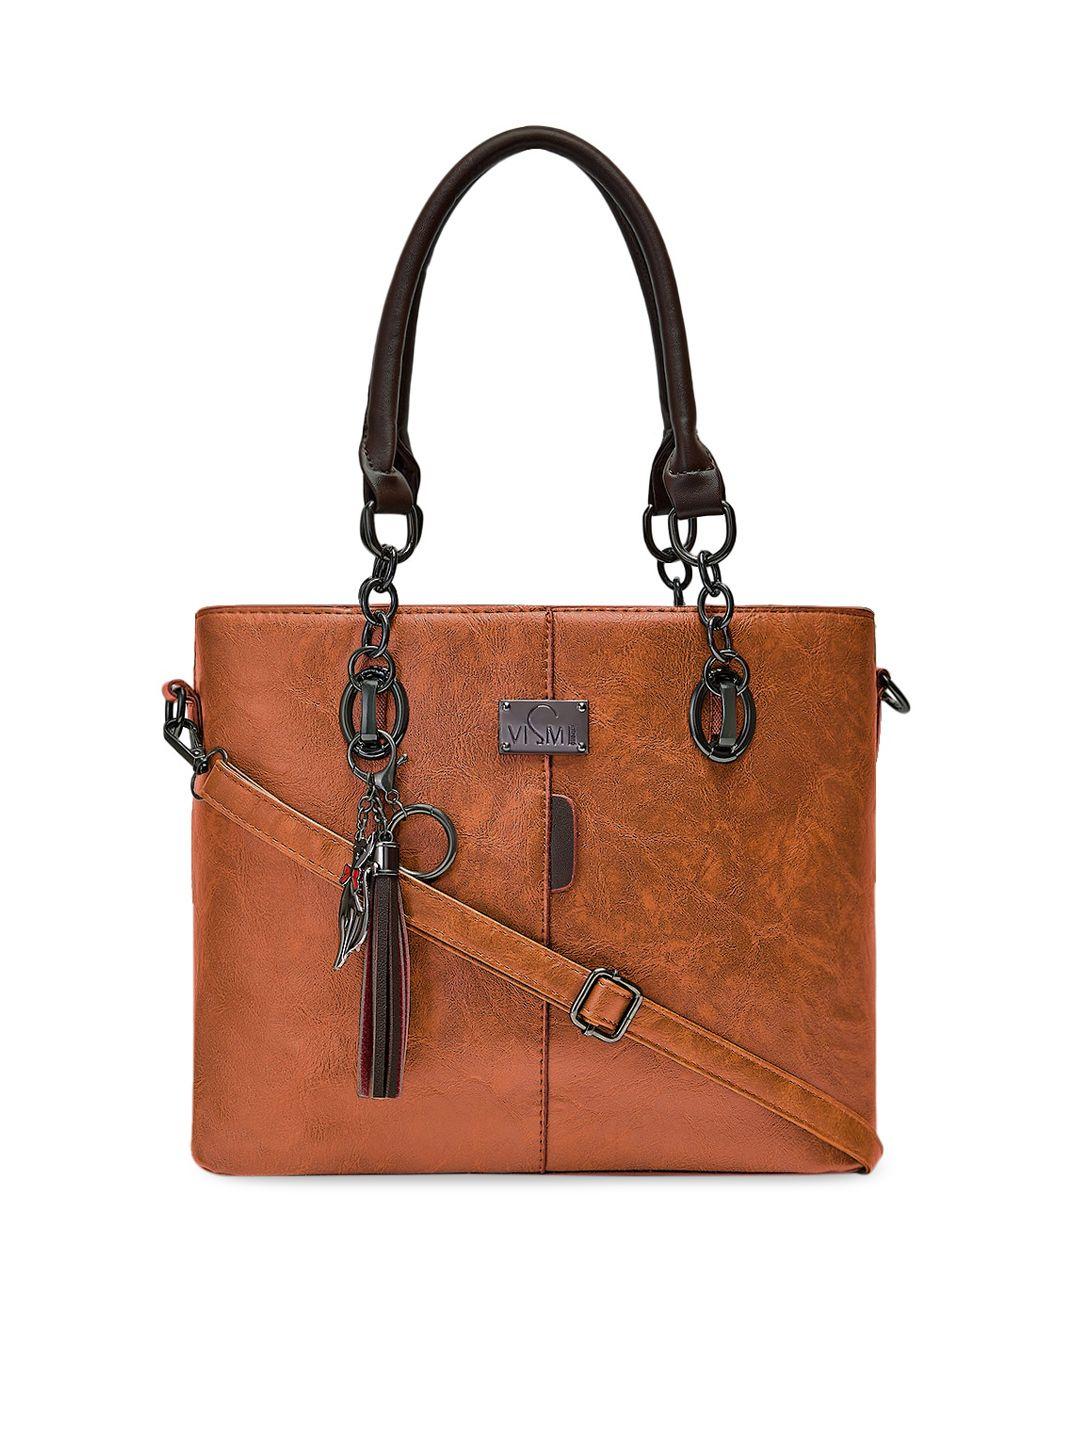 vismiintrend tan brown structured handheld bag with tasselled